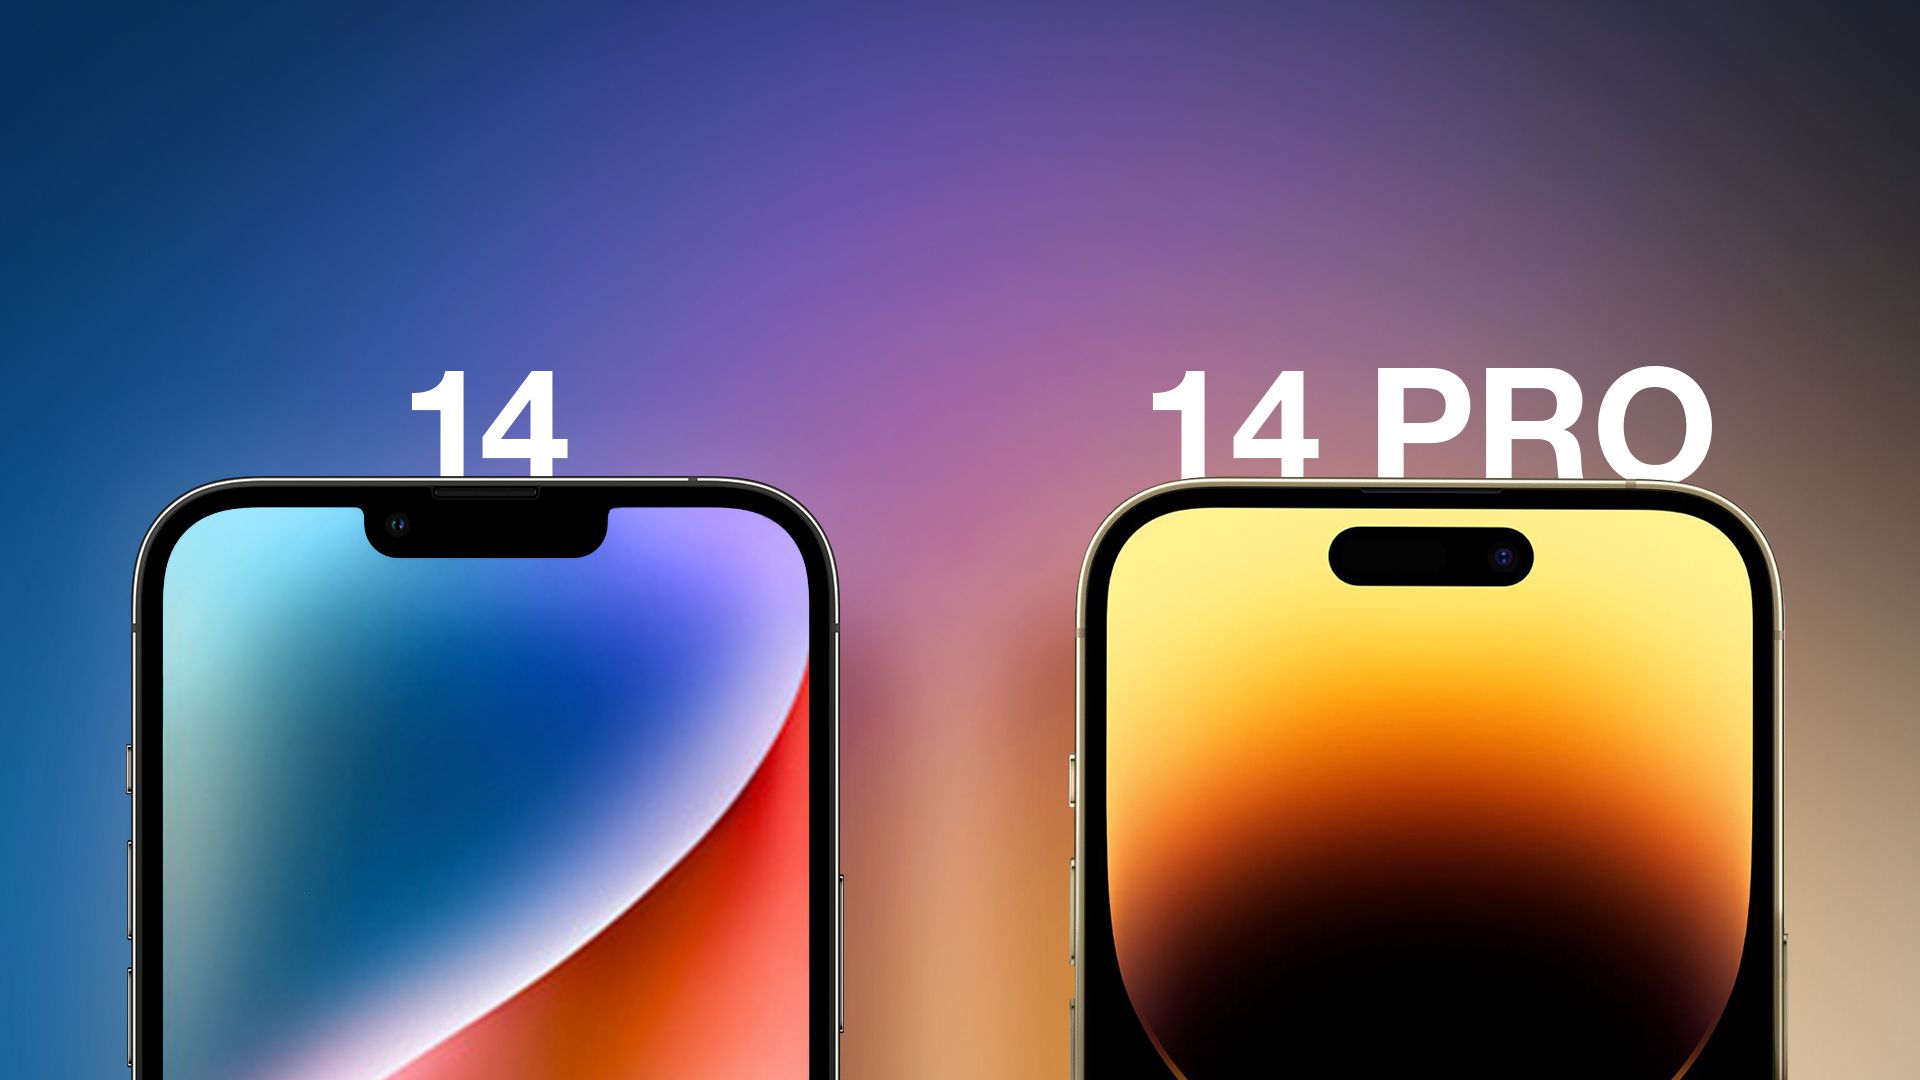 iphone 14 pro vs pro max